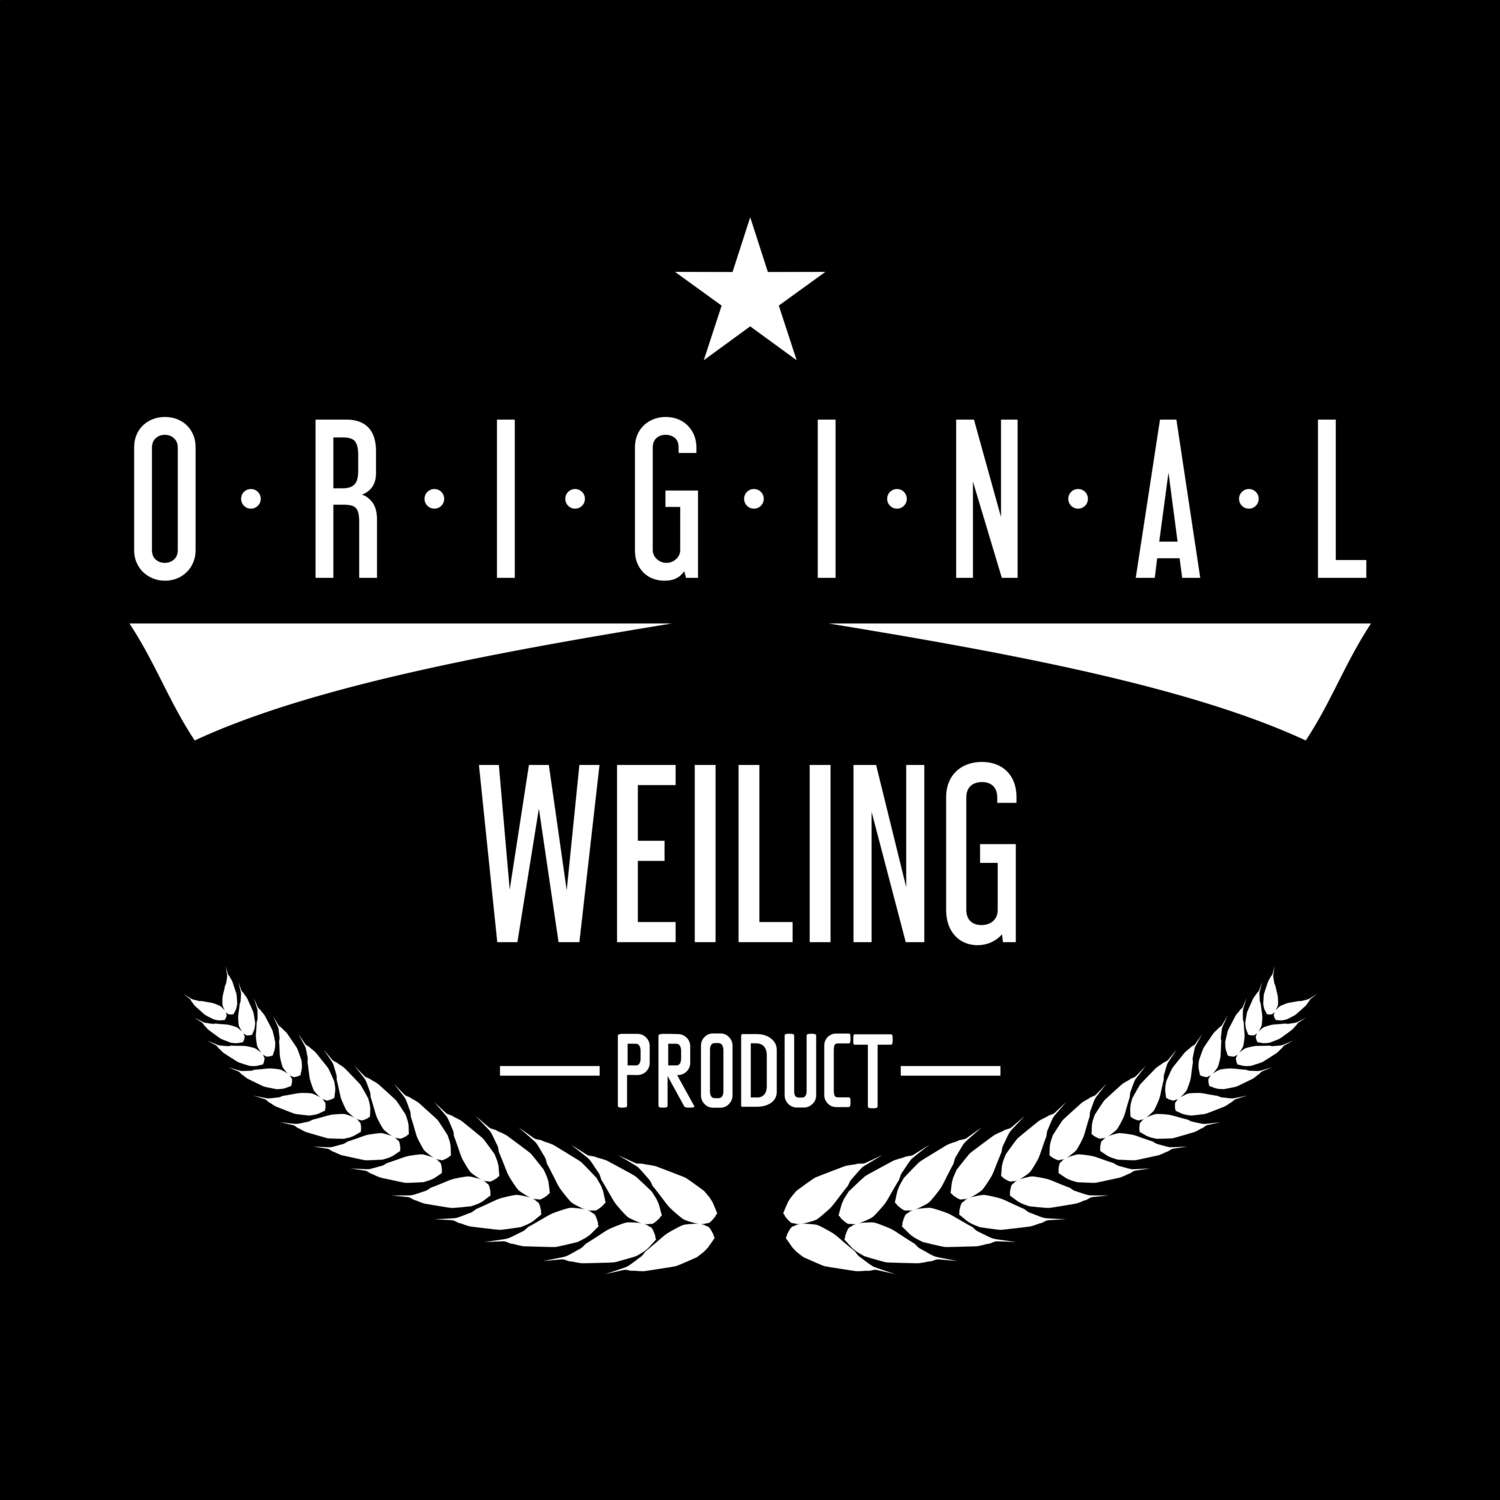 Weiling T-Shirt »Original Product«